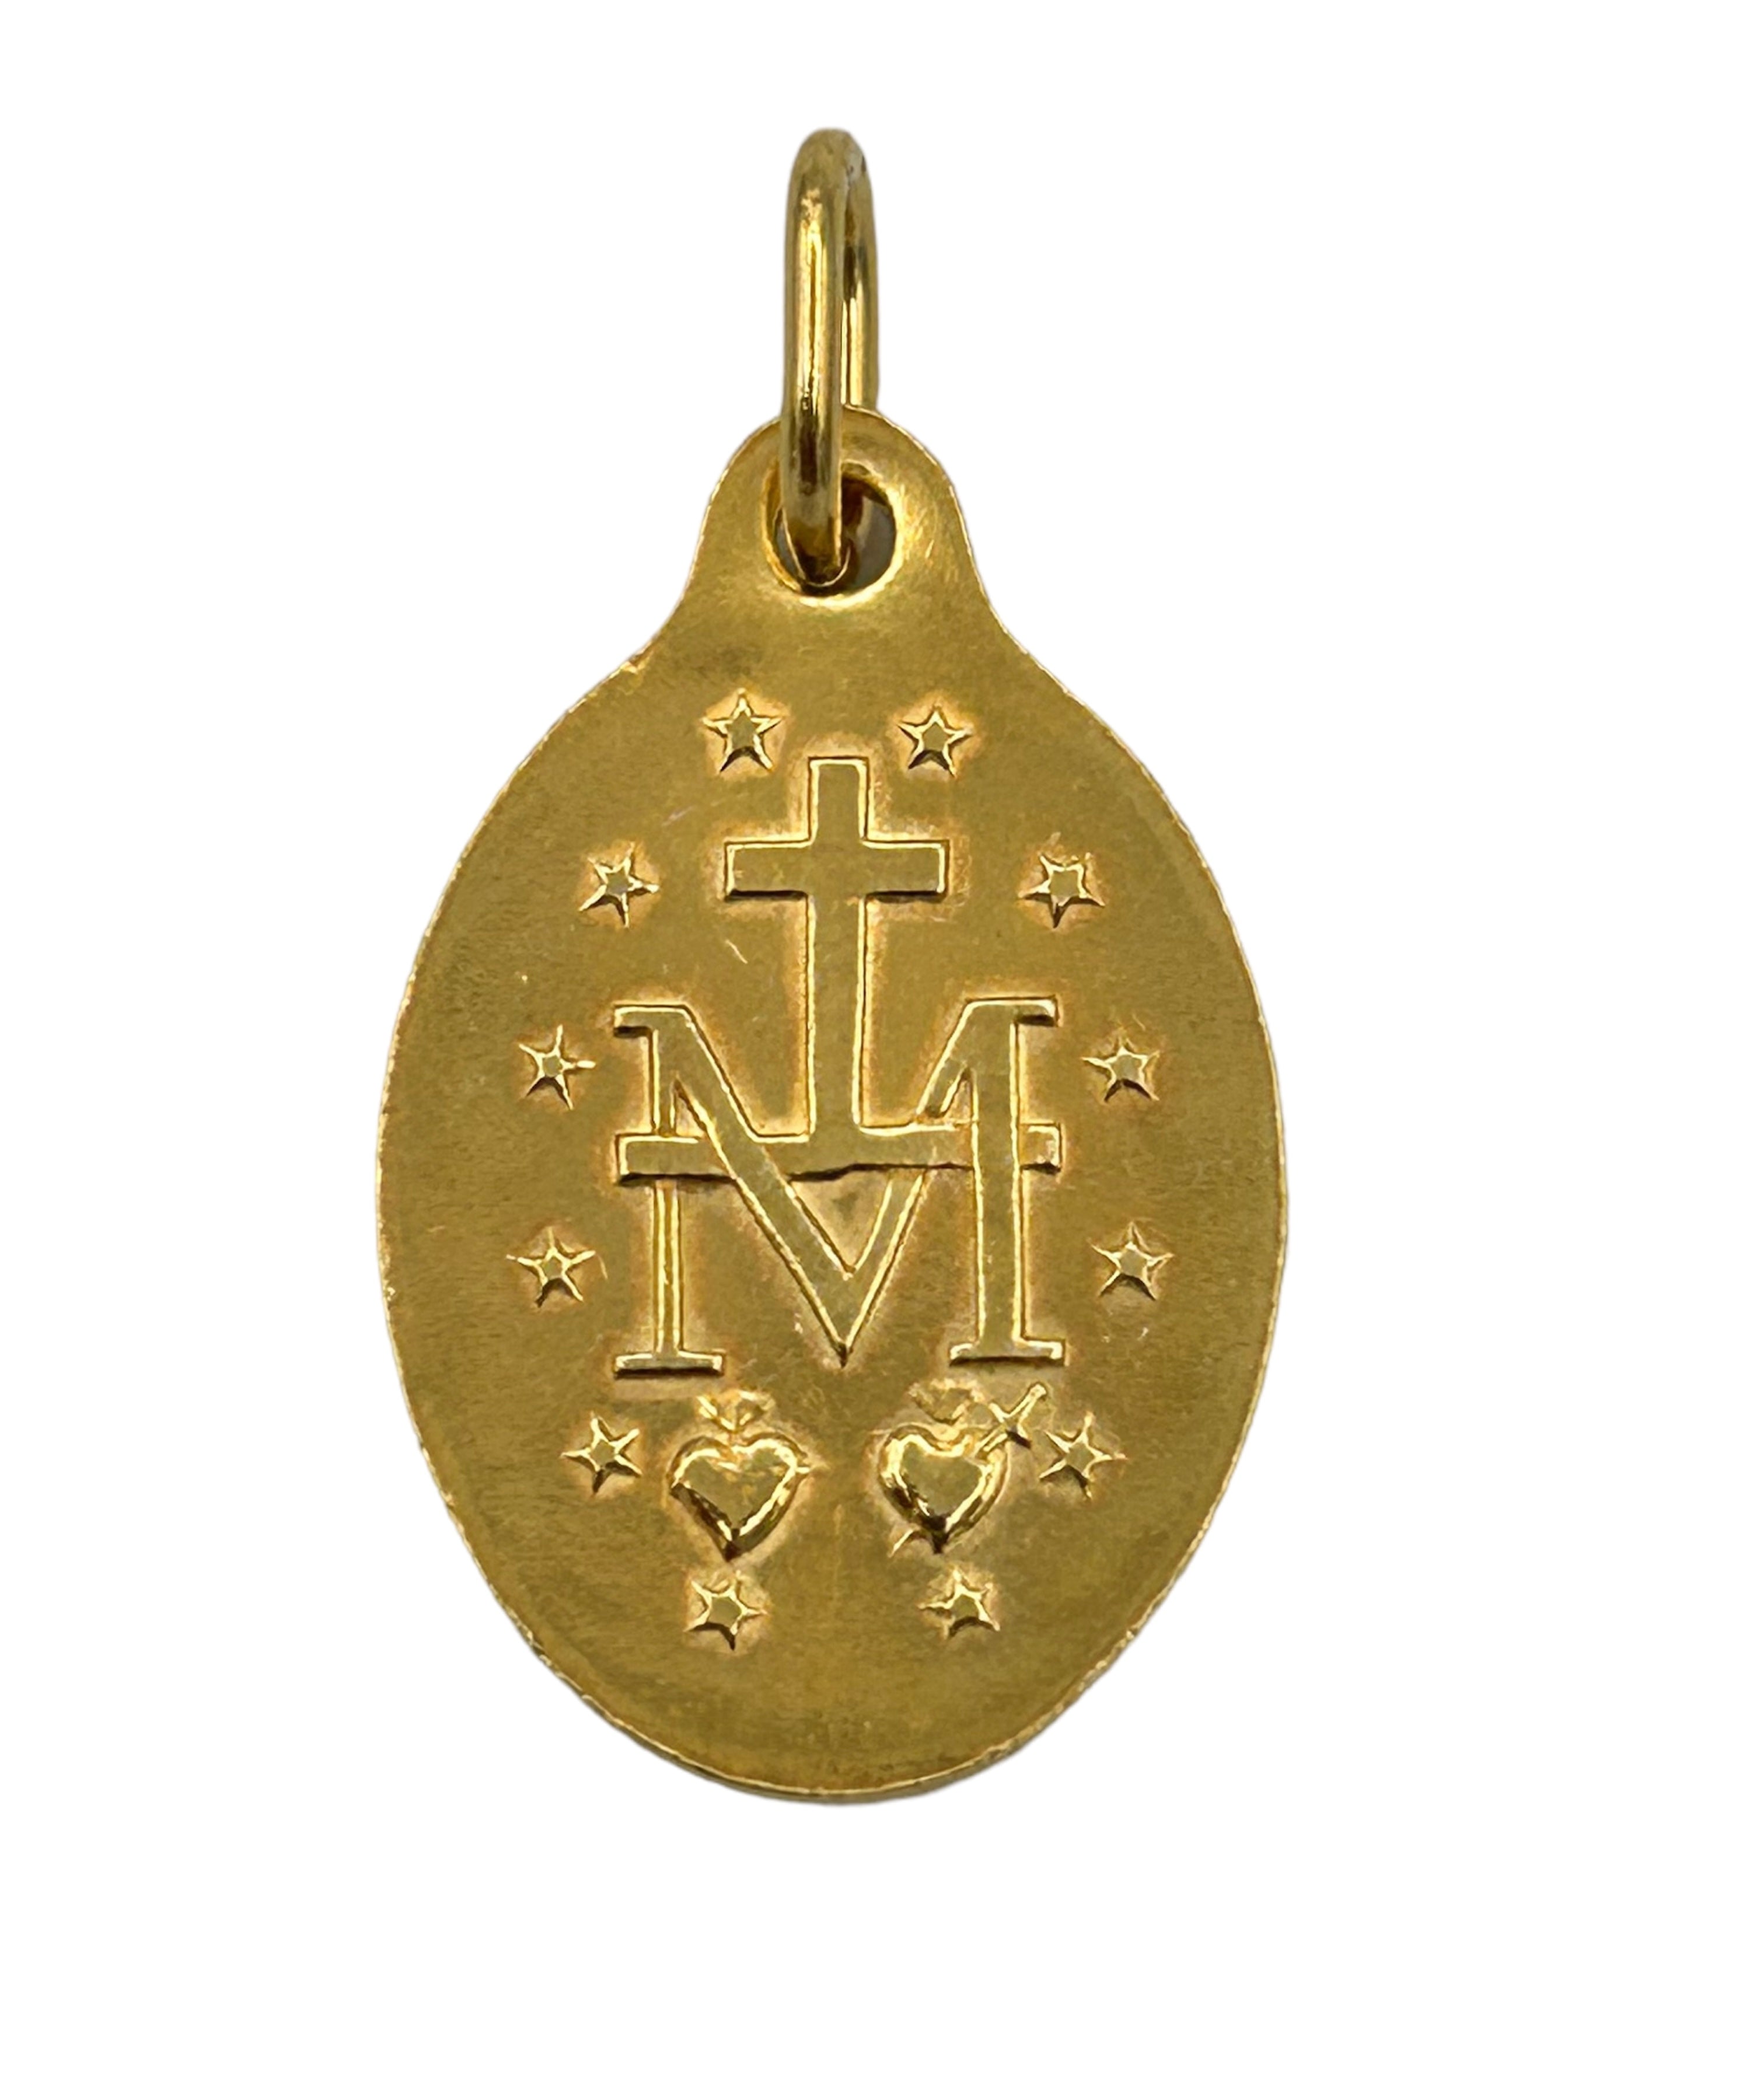 Médaille miraculeuse, Ovale Dorée or fin 24 carats, fond blanc